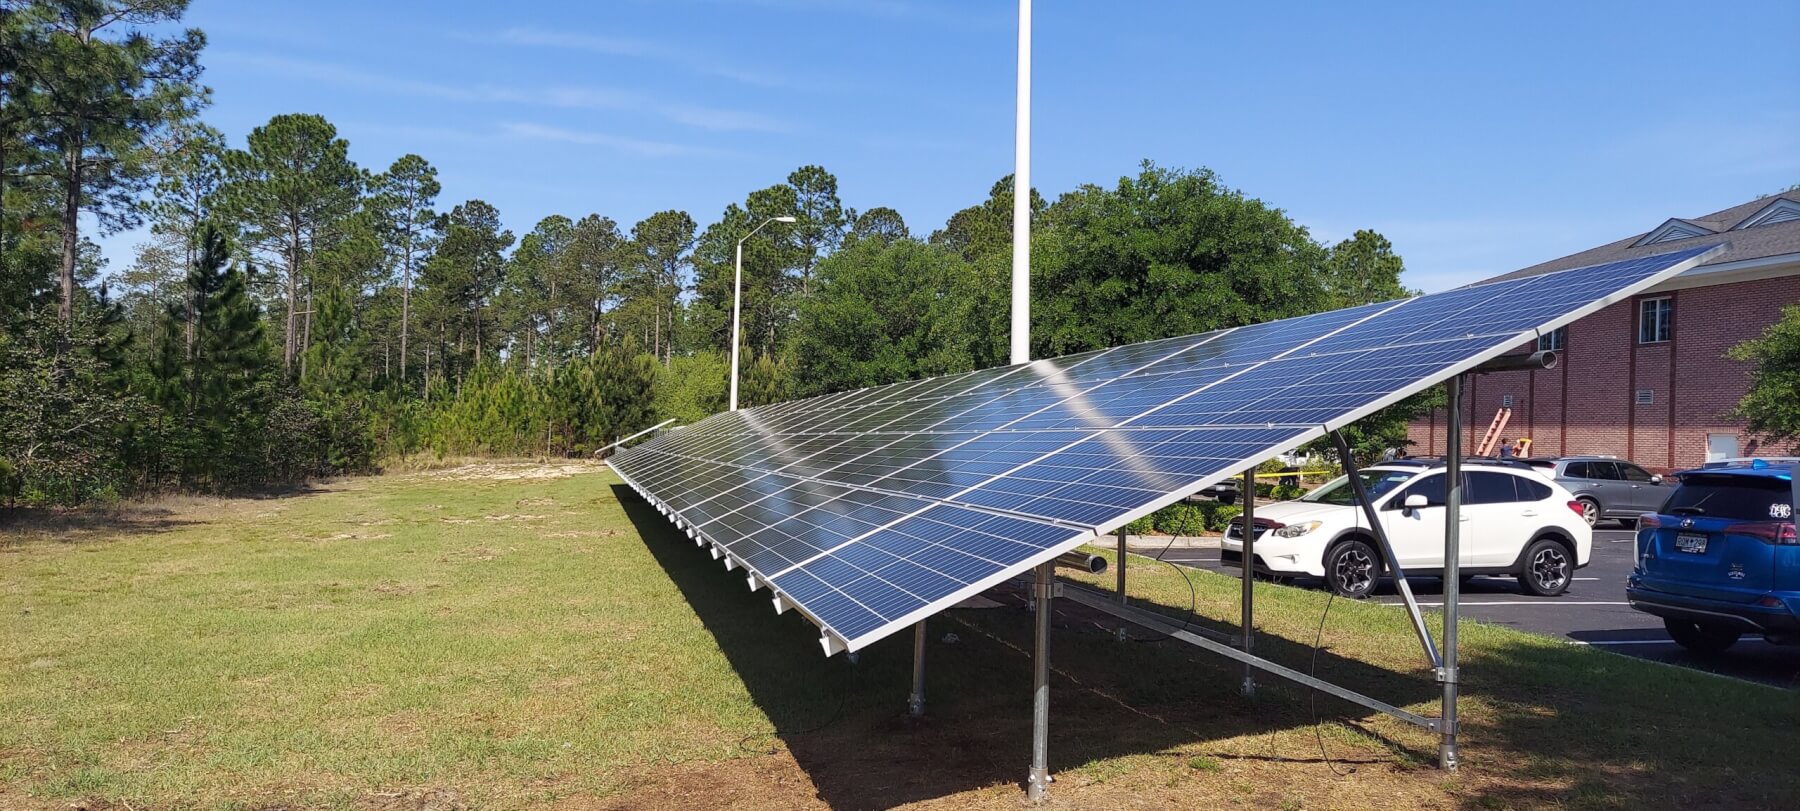 South Carolina Ground mount solar